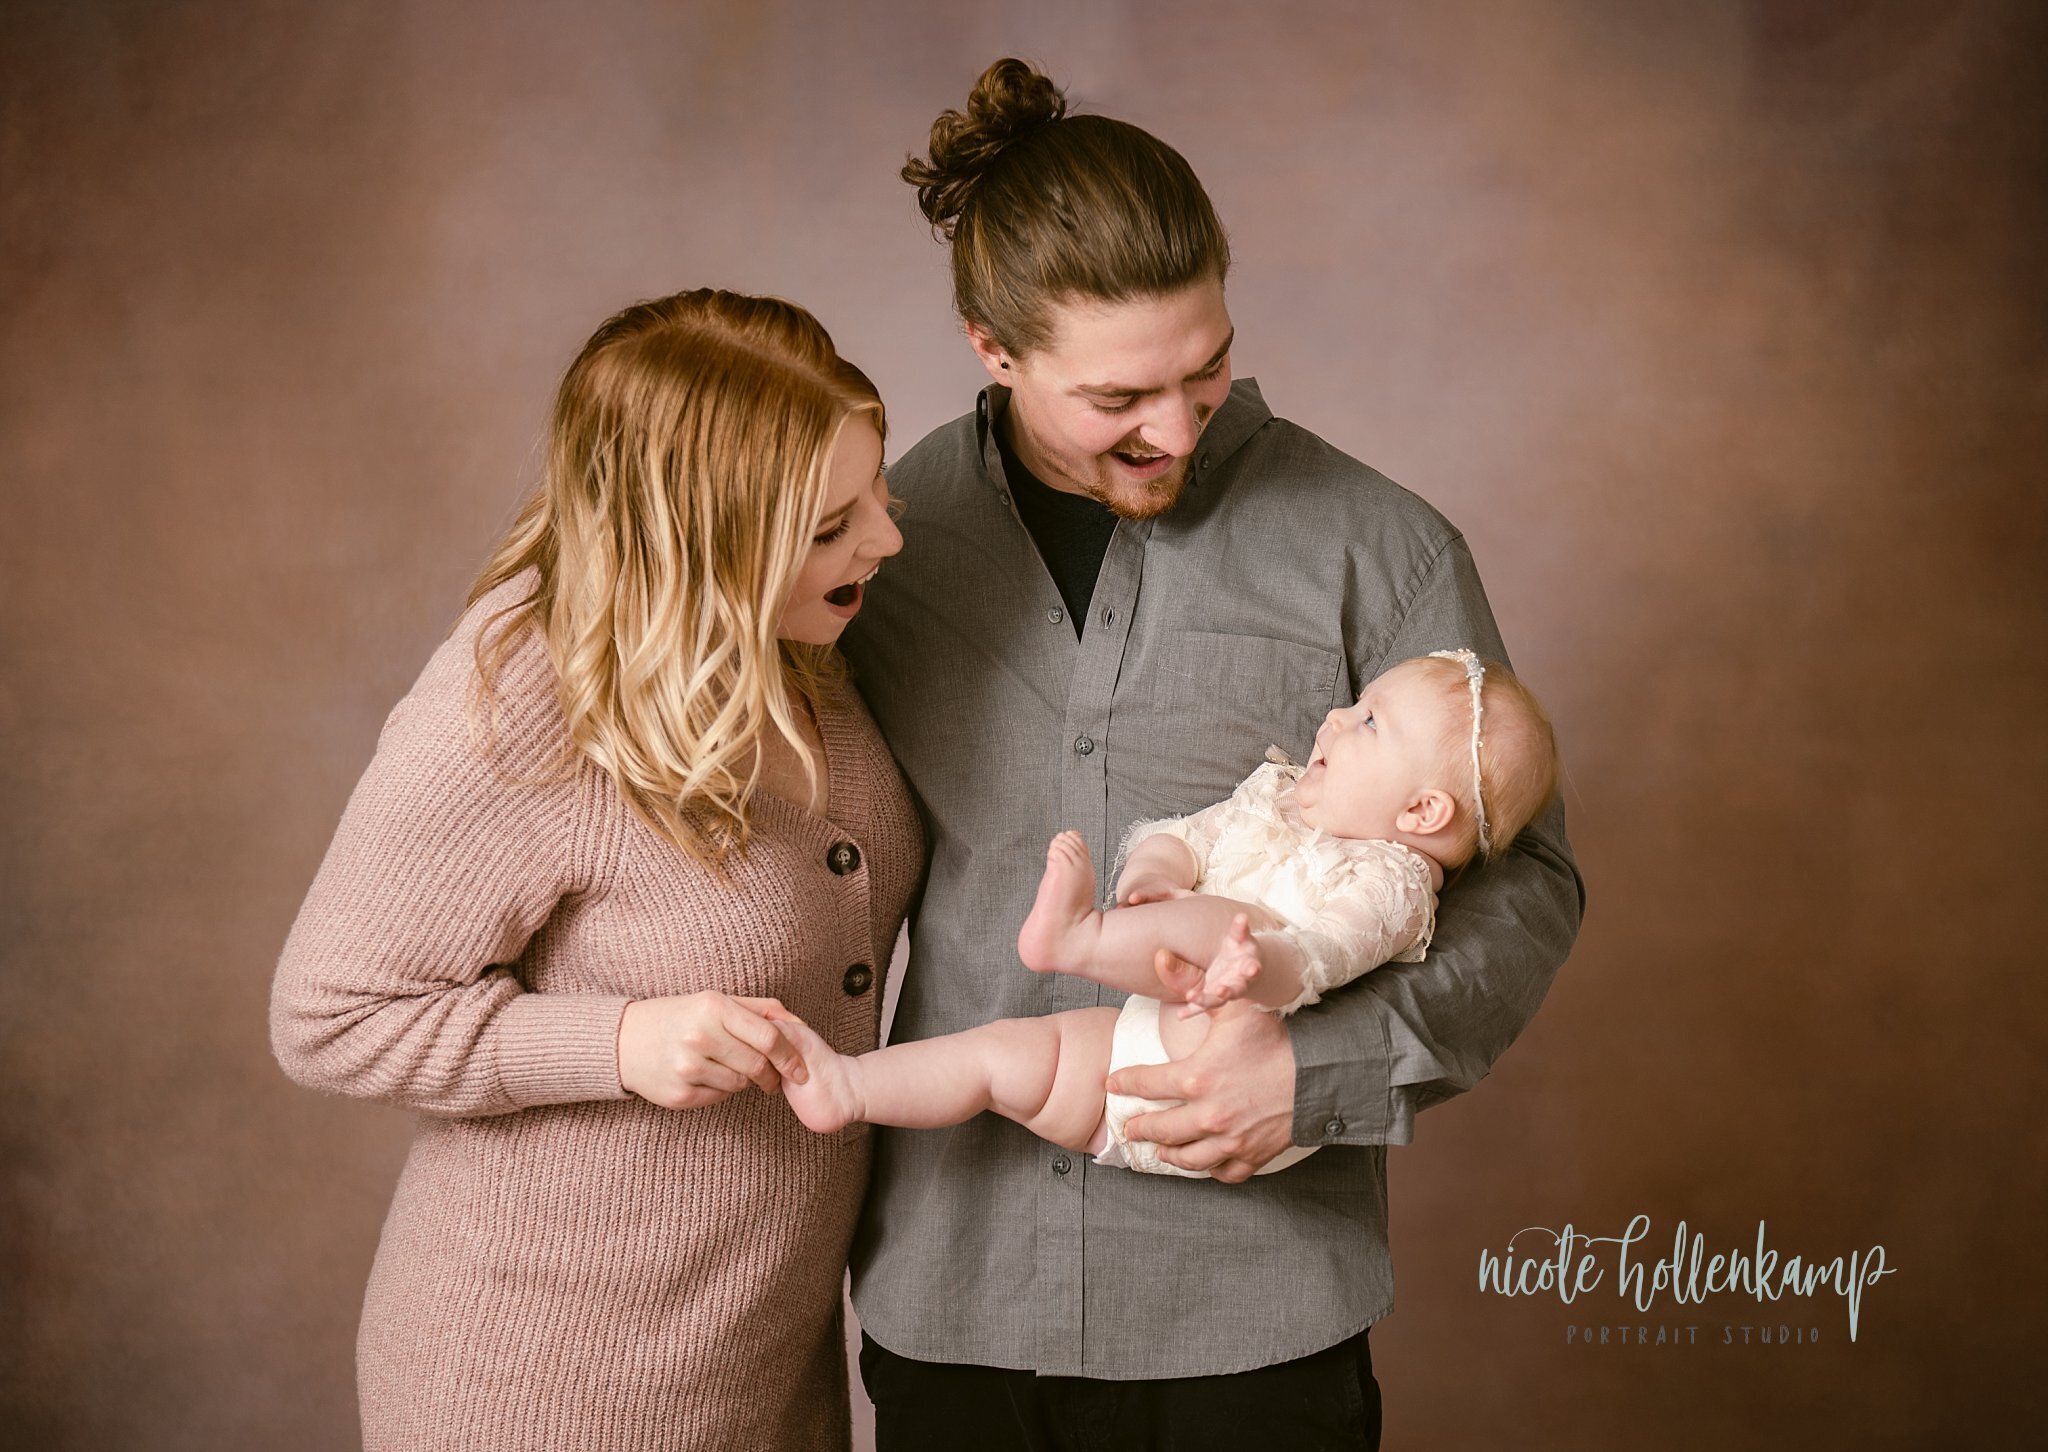 Newborn Photographers in Minnesota with a studio